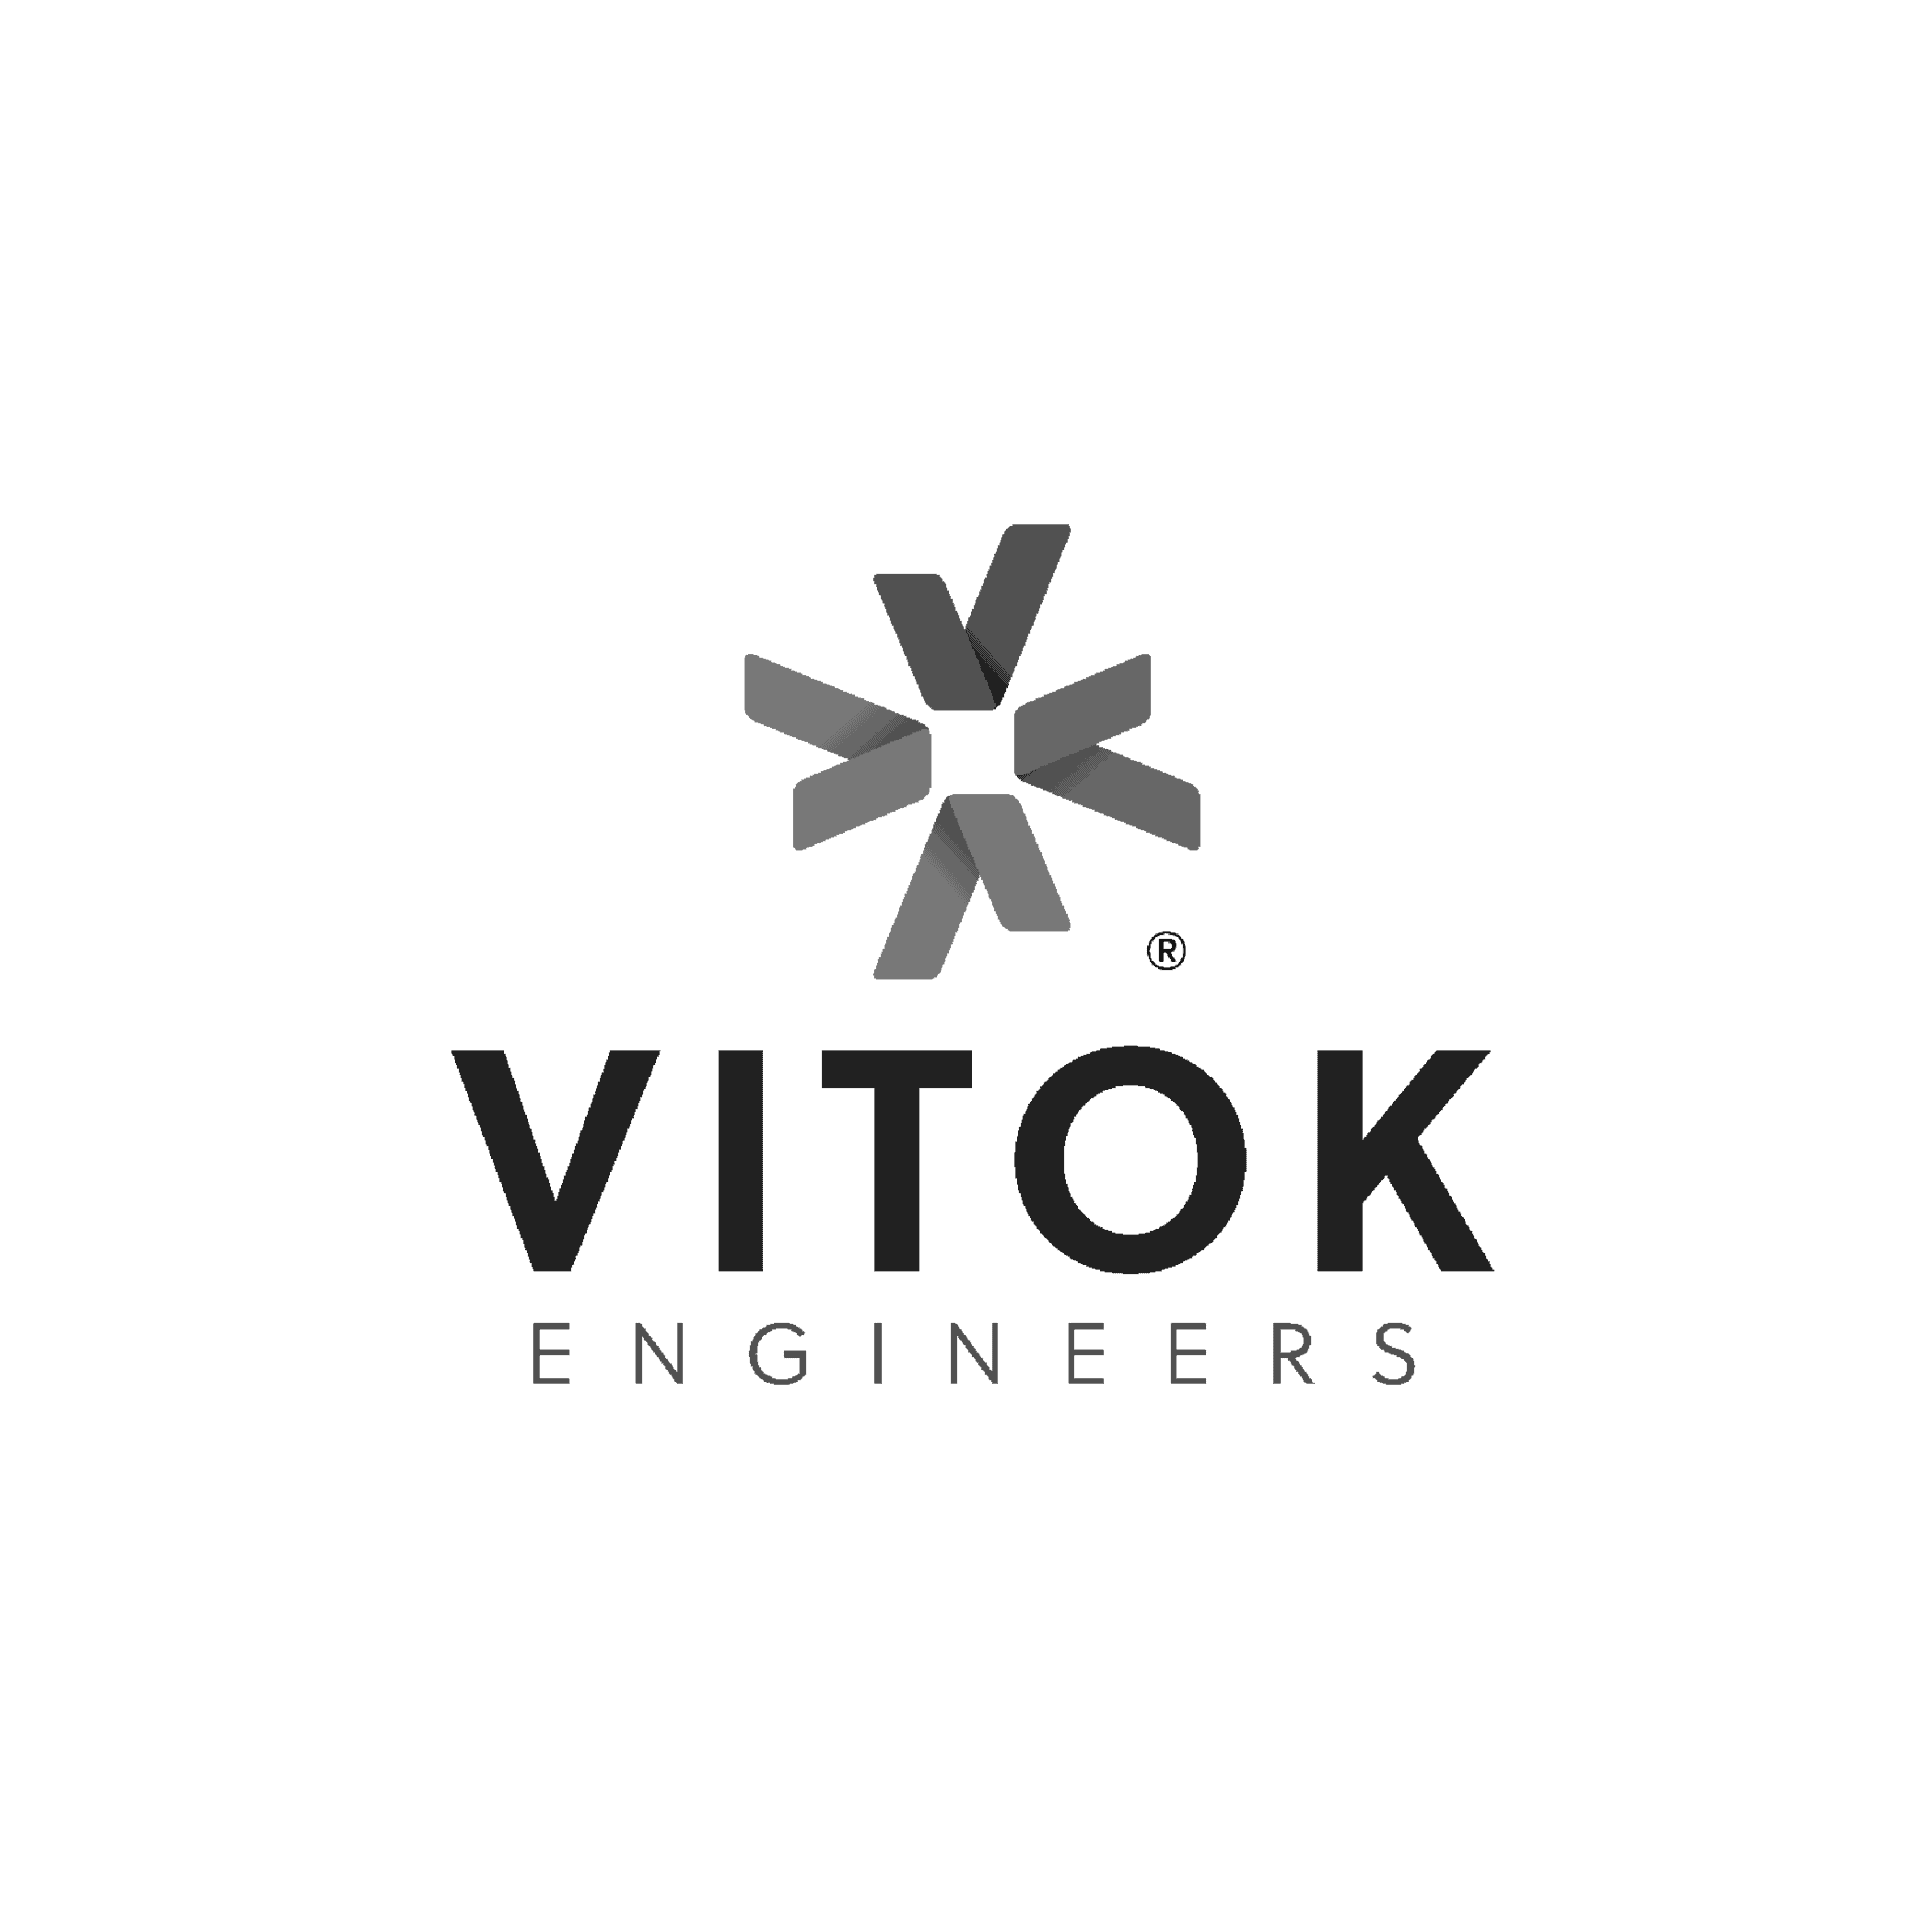 Vitok Engineers Logo